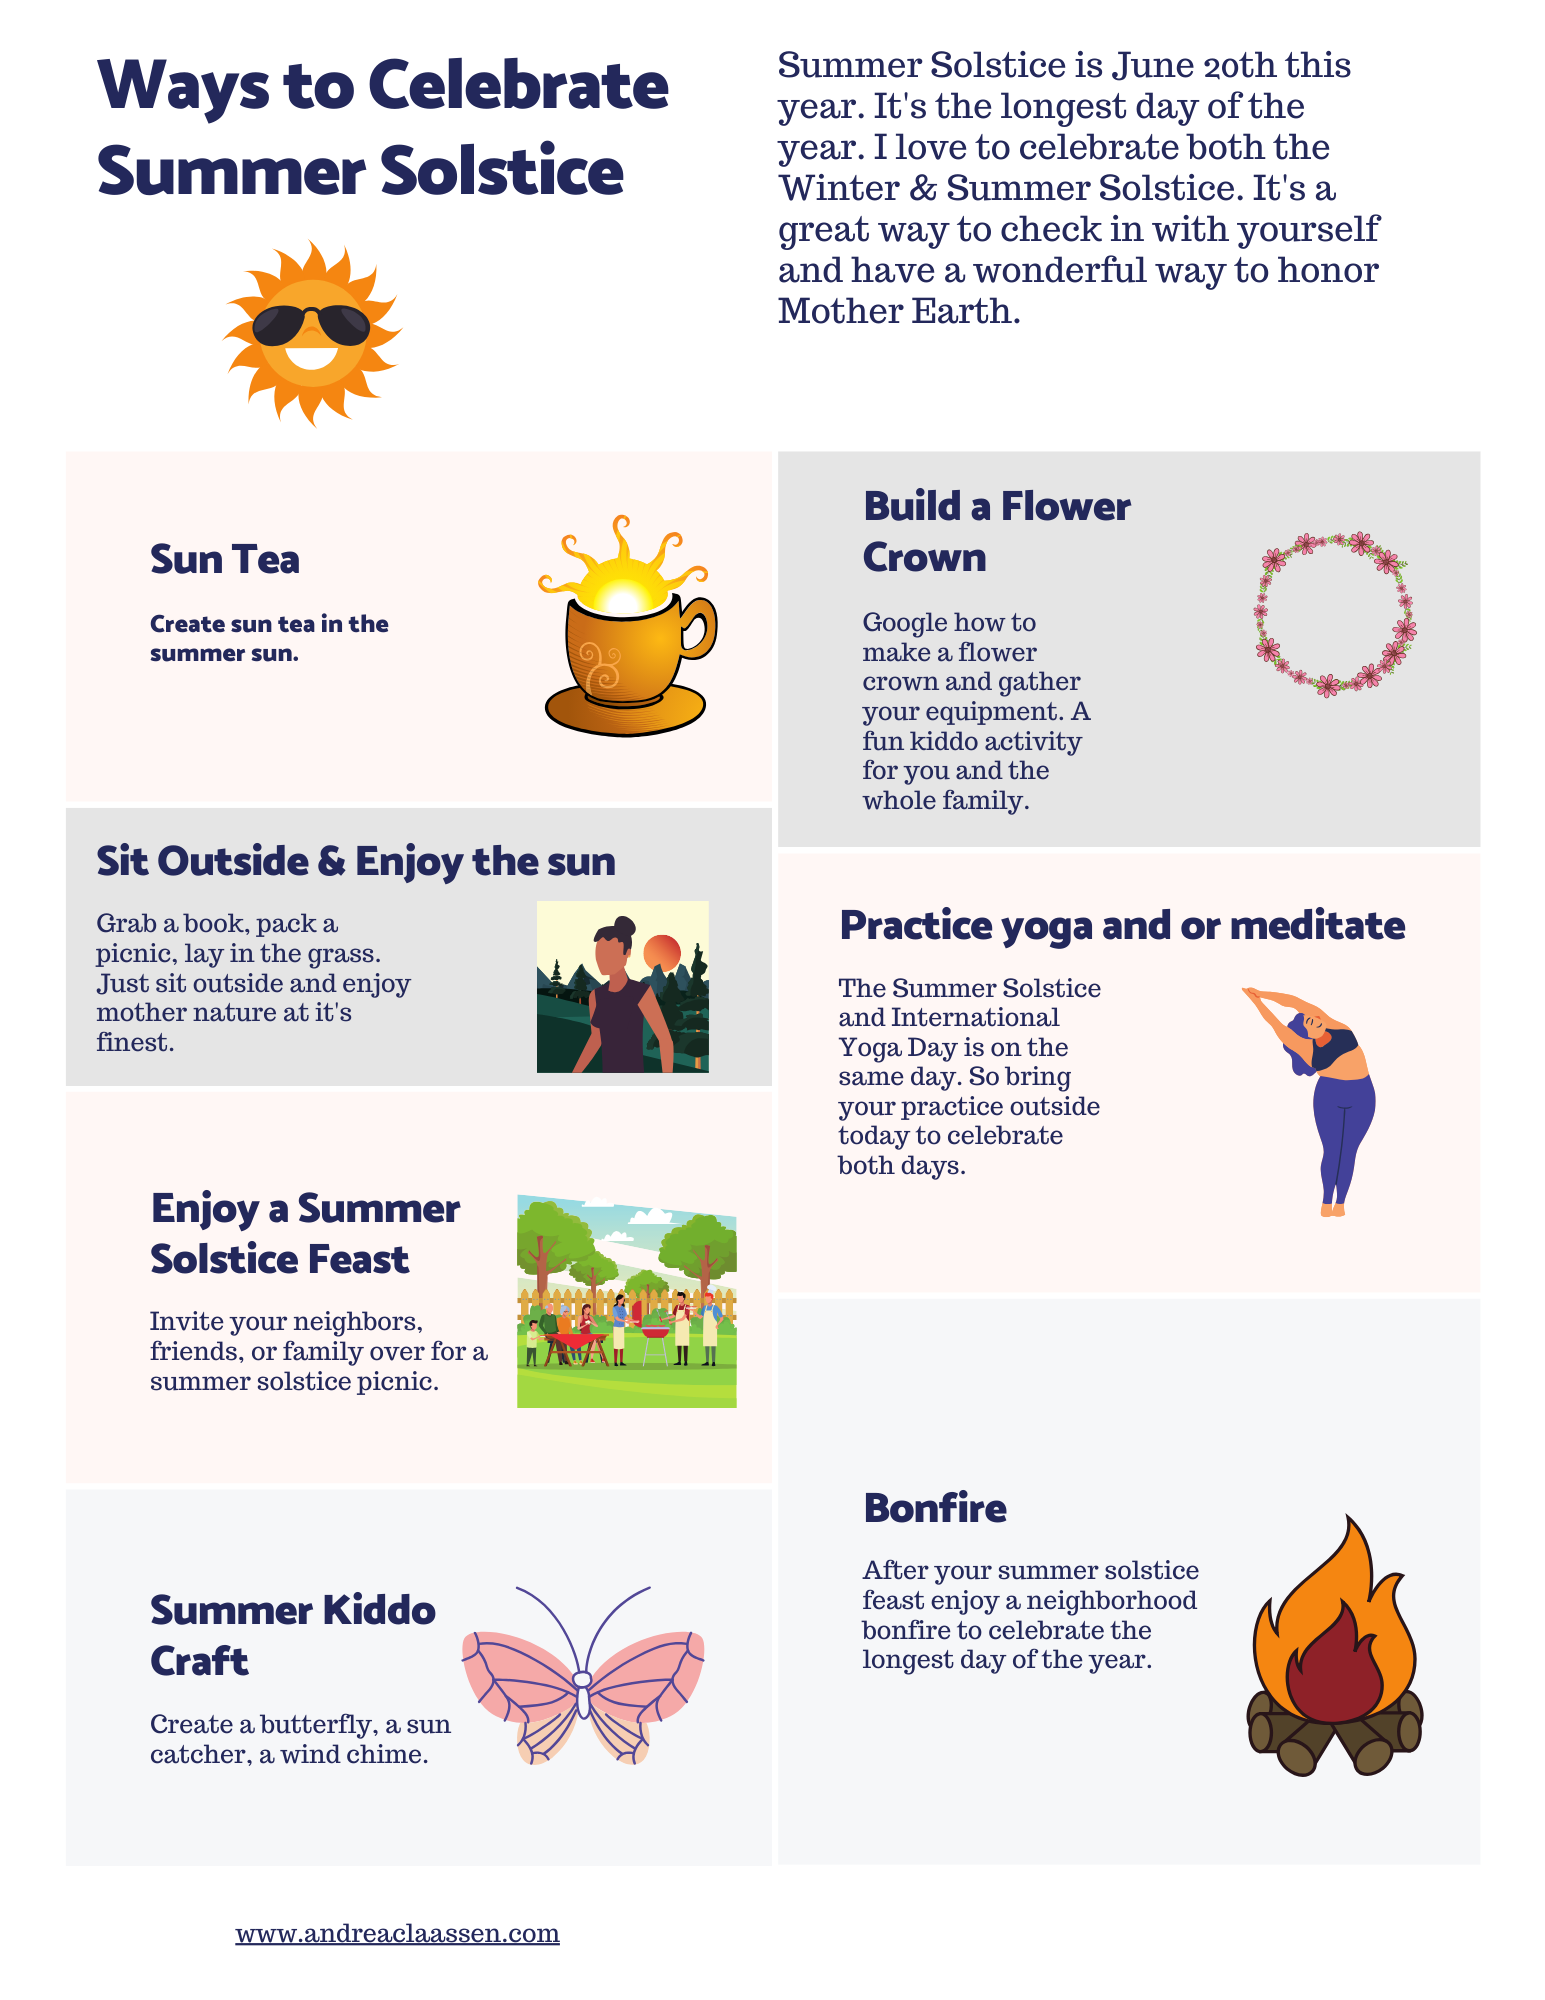 Ways to Celebrate Summer Solsticewebsite